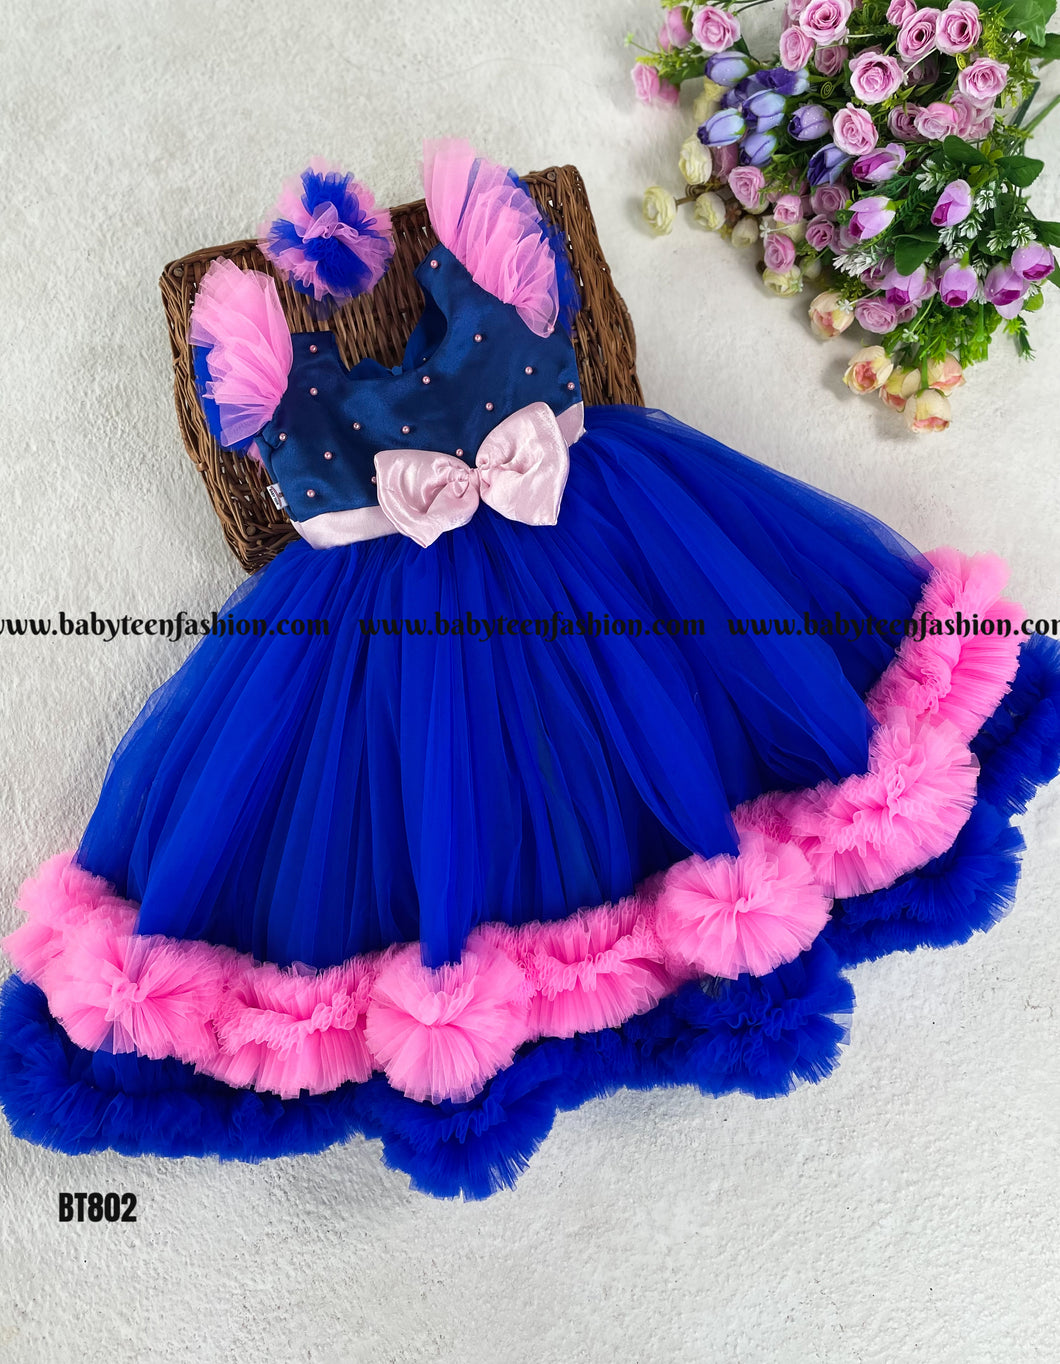 BT802 Starry Night Flair Dress - Infants' Festive Attire